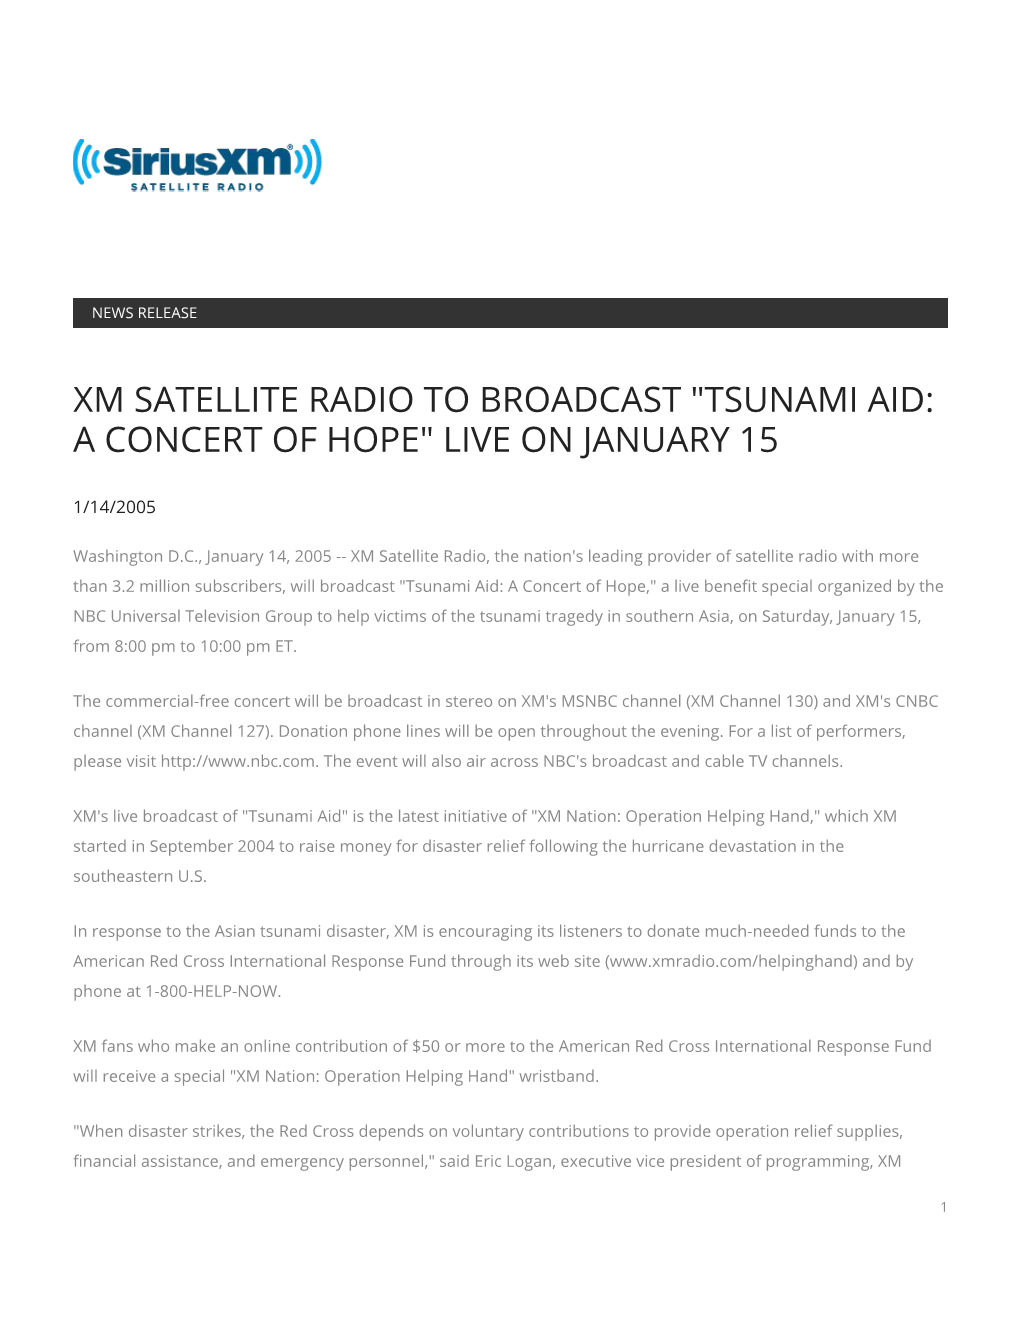 Xm Satellite Radio to Broadcast "Tsunami Aid: a Concert of Hope" Live on January 15